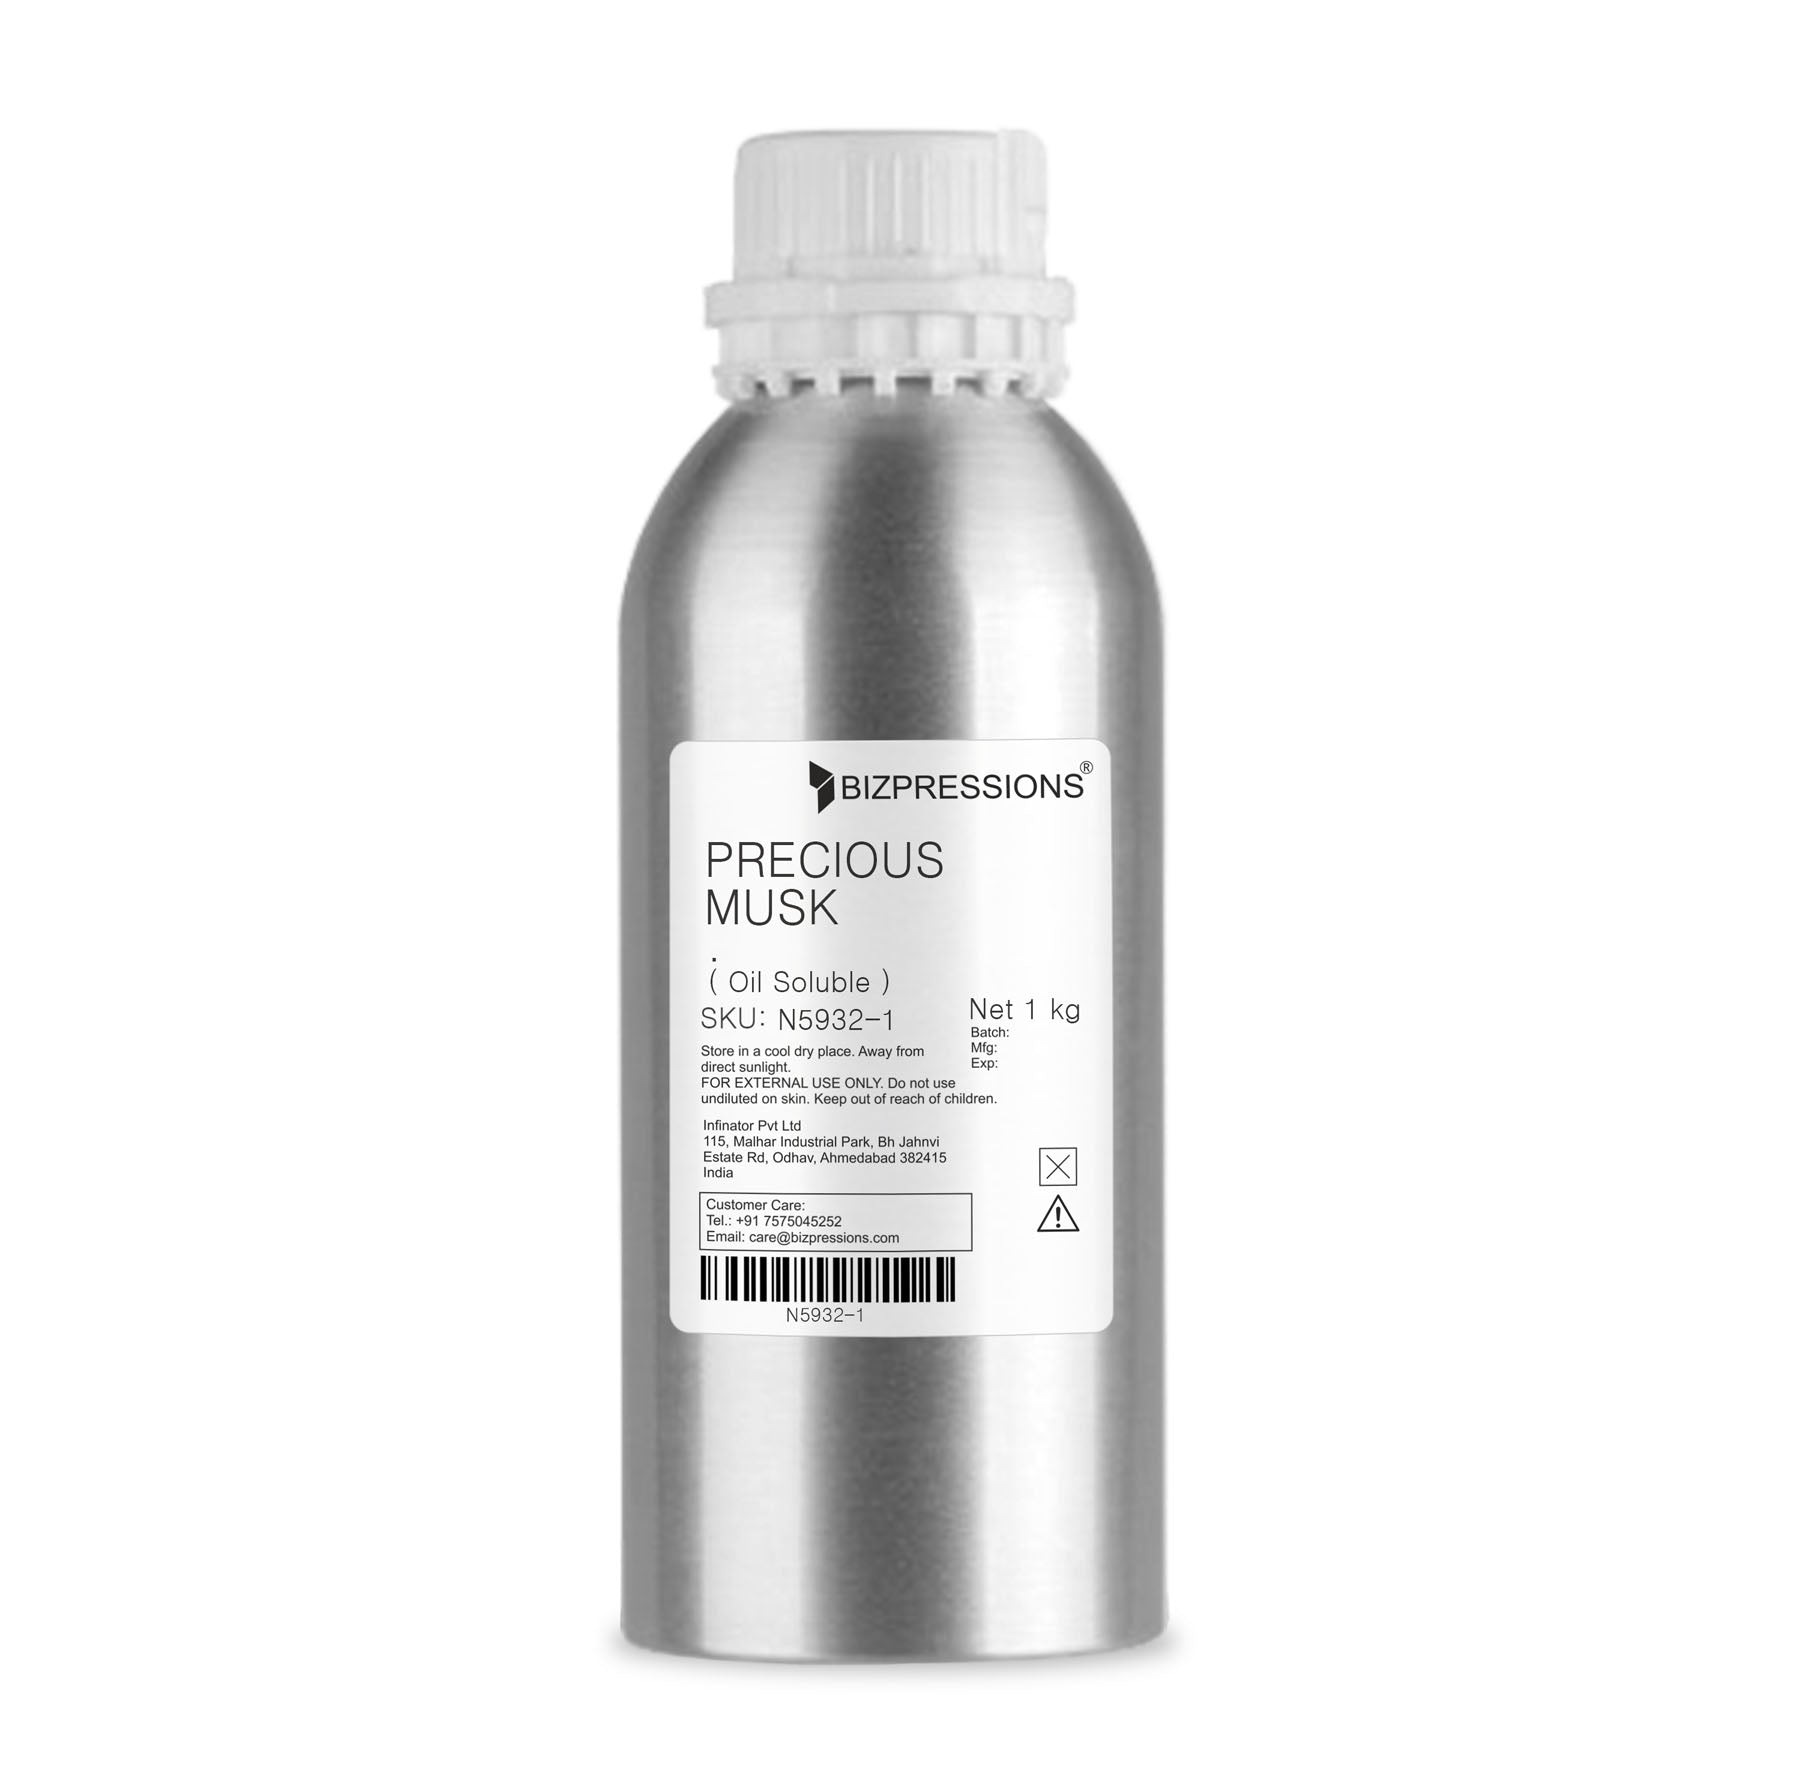 PRECIOUS MUSK - Fragrance ( Oil Soluble ) - 1 kg